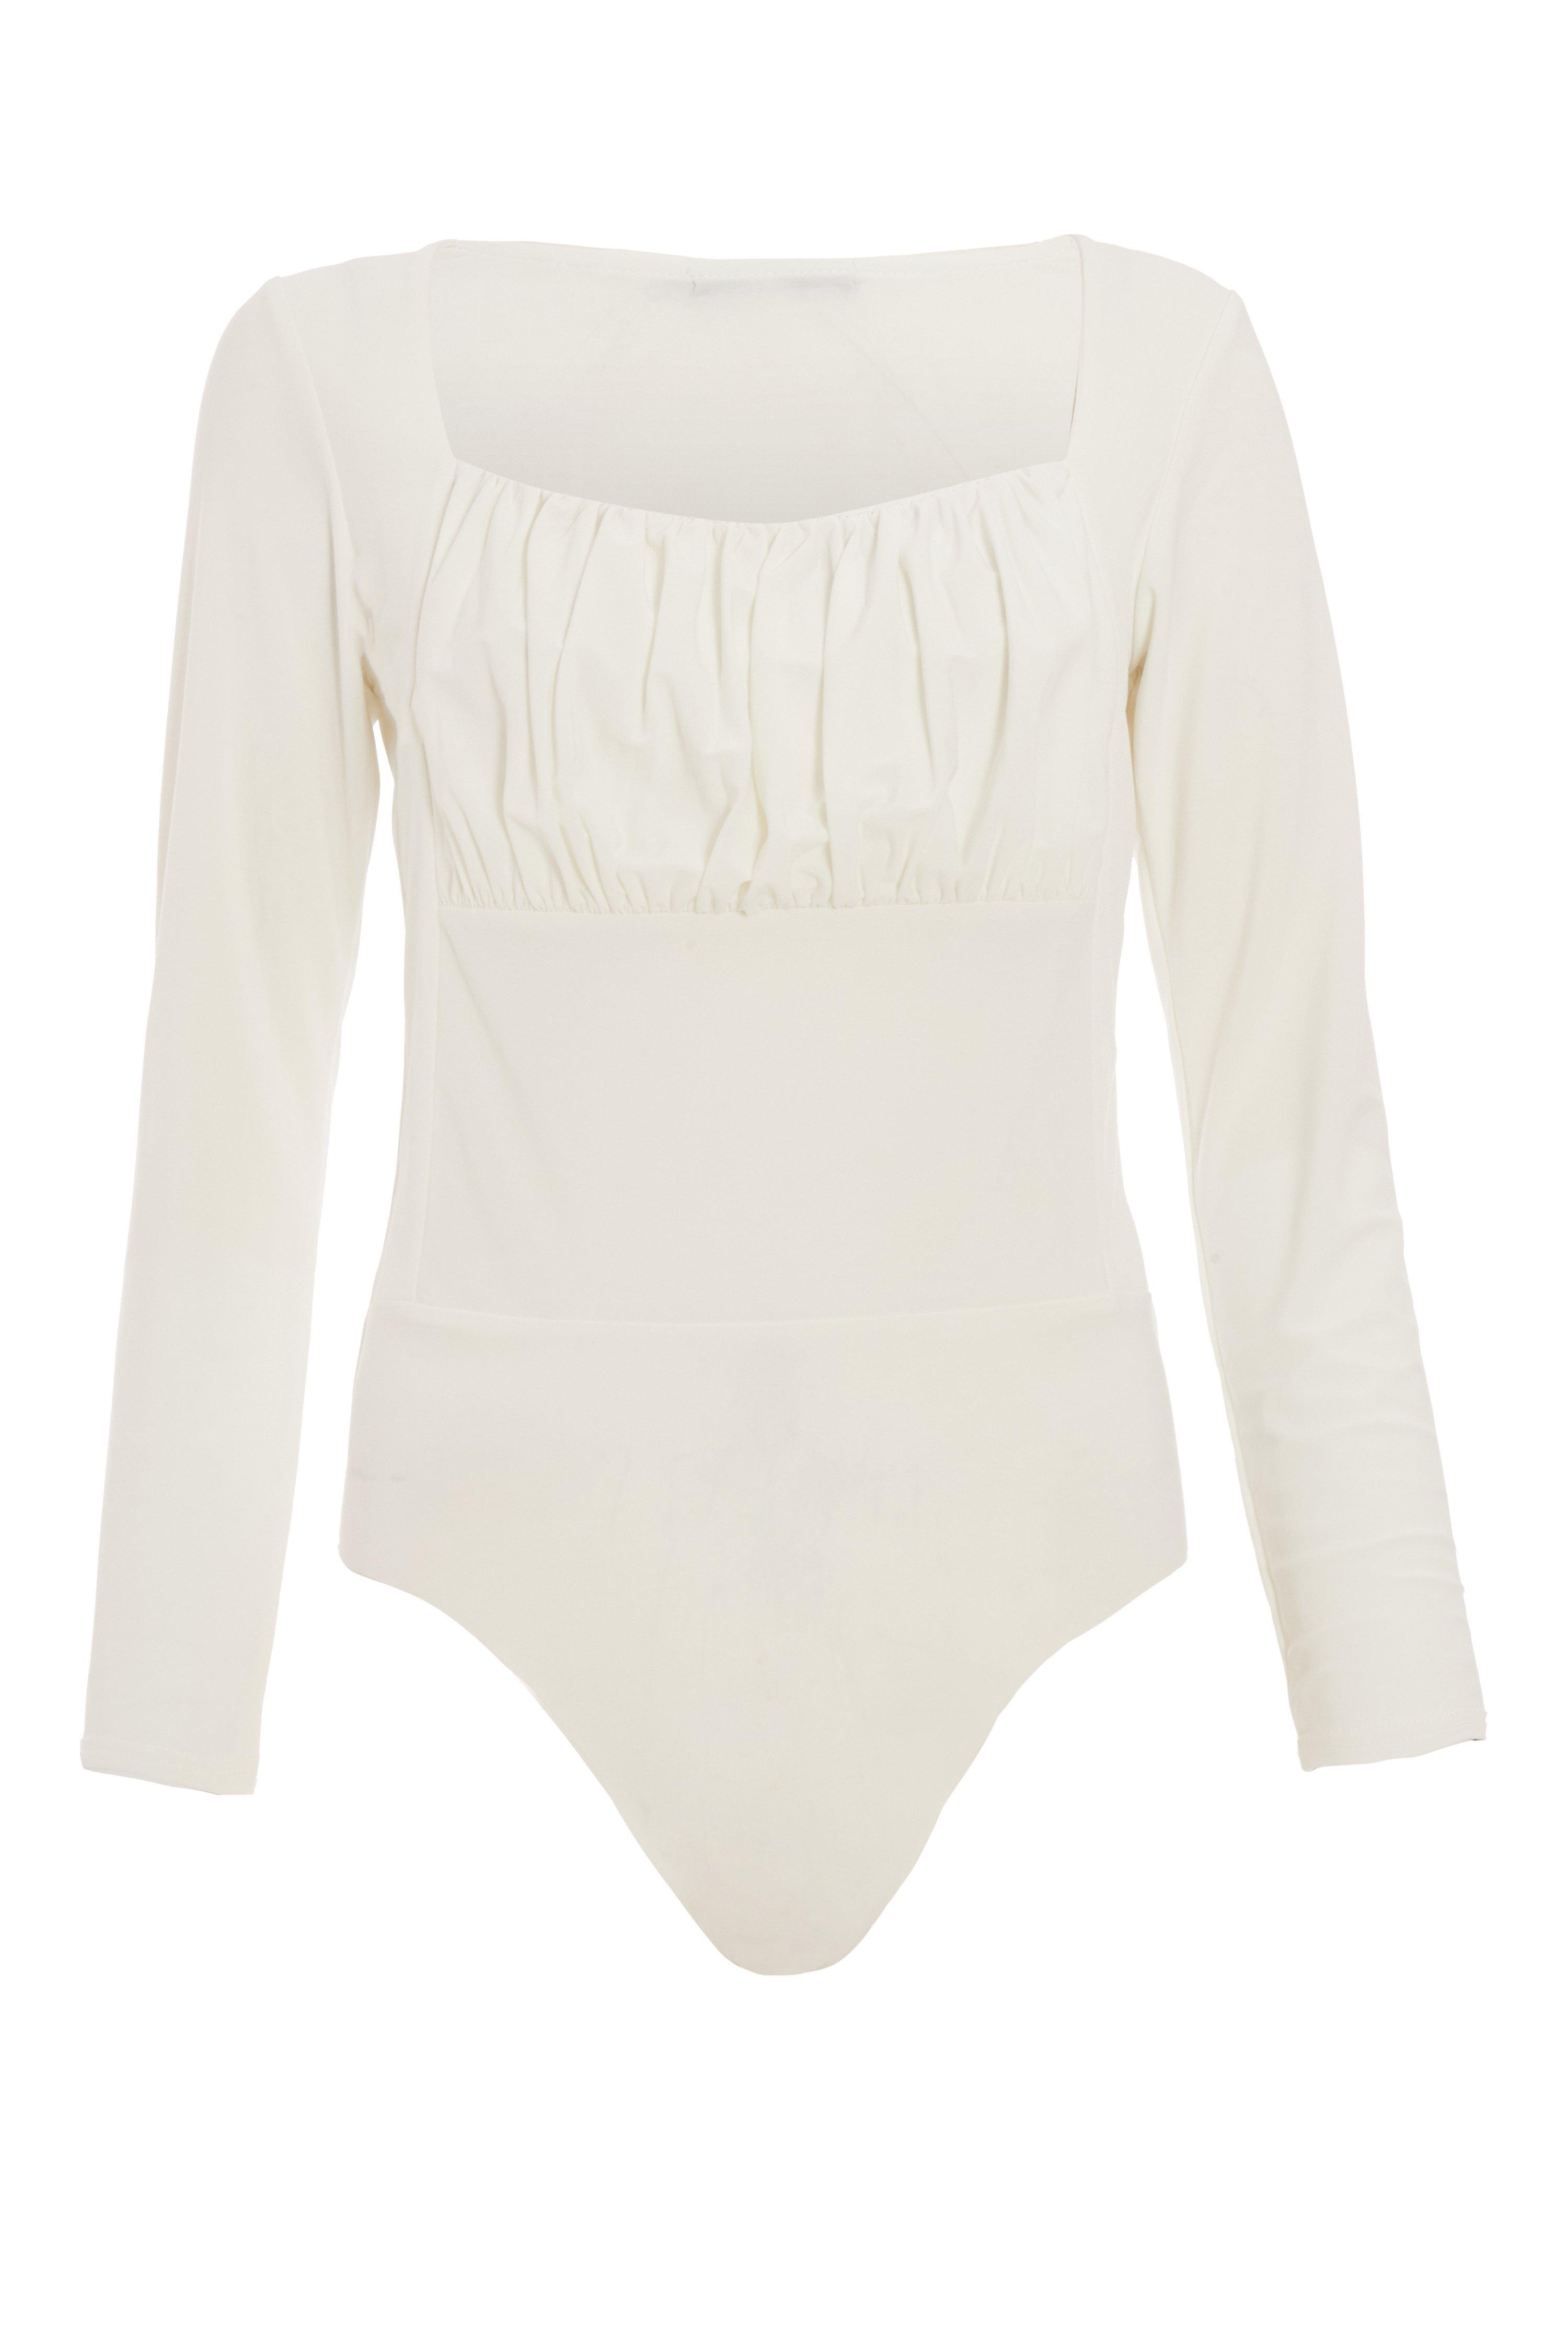 Cream Ruched Long Sleeve Bodysuit - Quiz Clothing